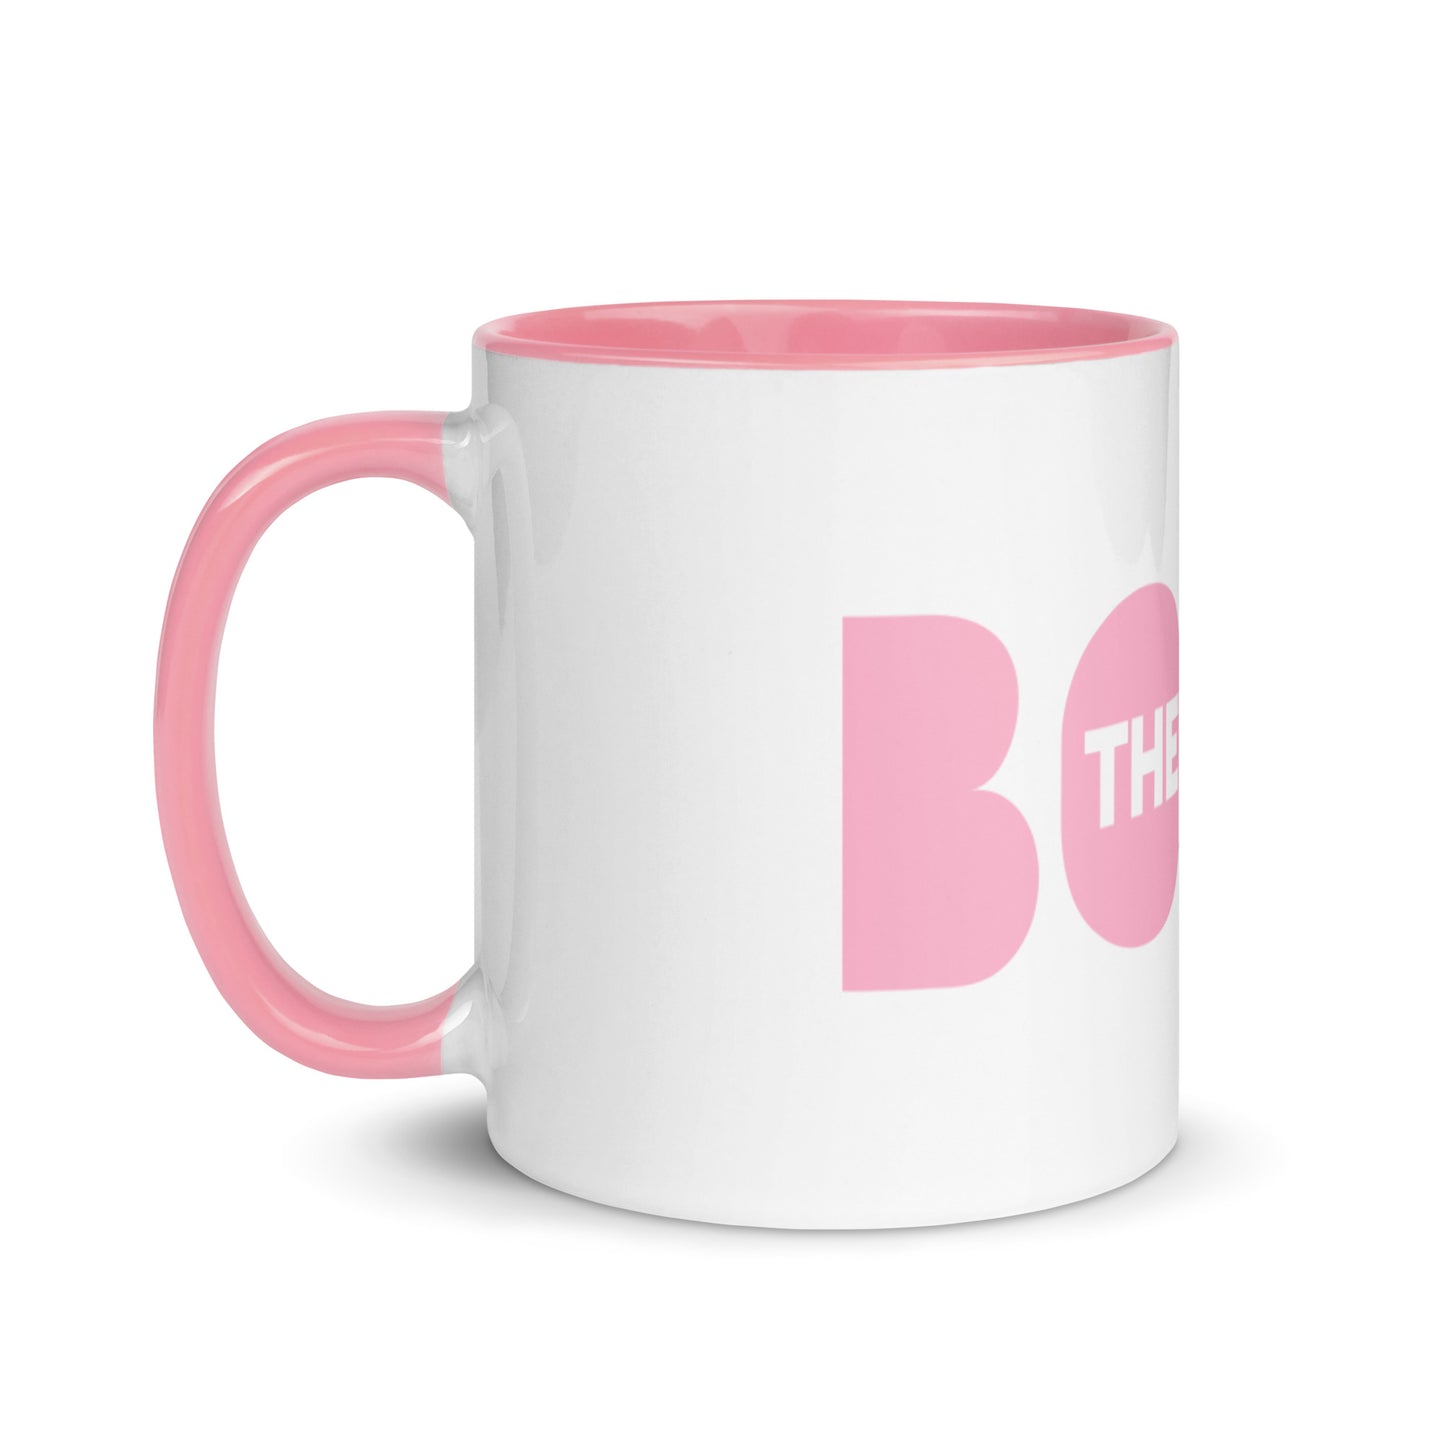 The Boss Mug | Pink and White